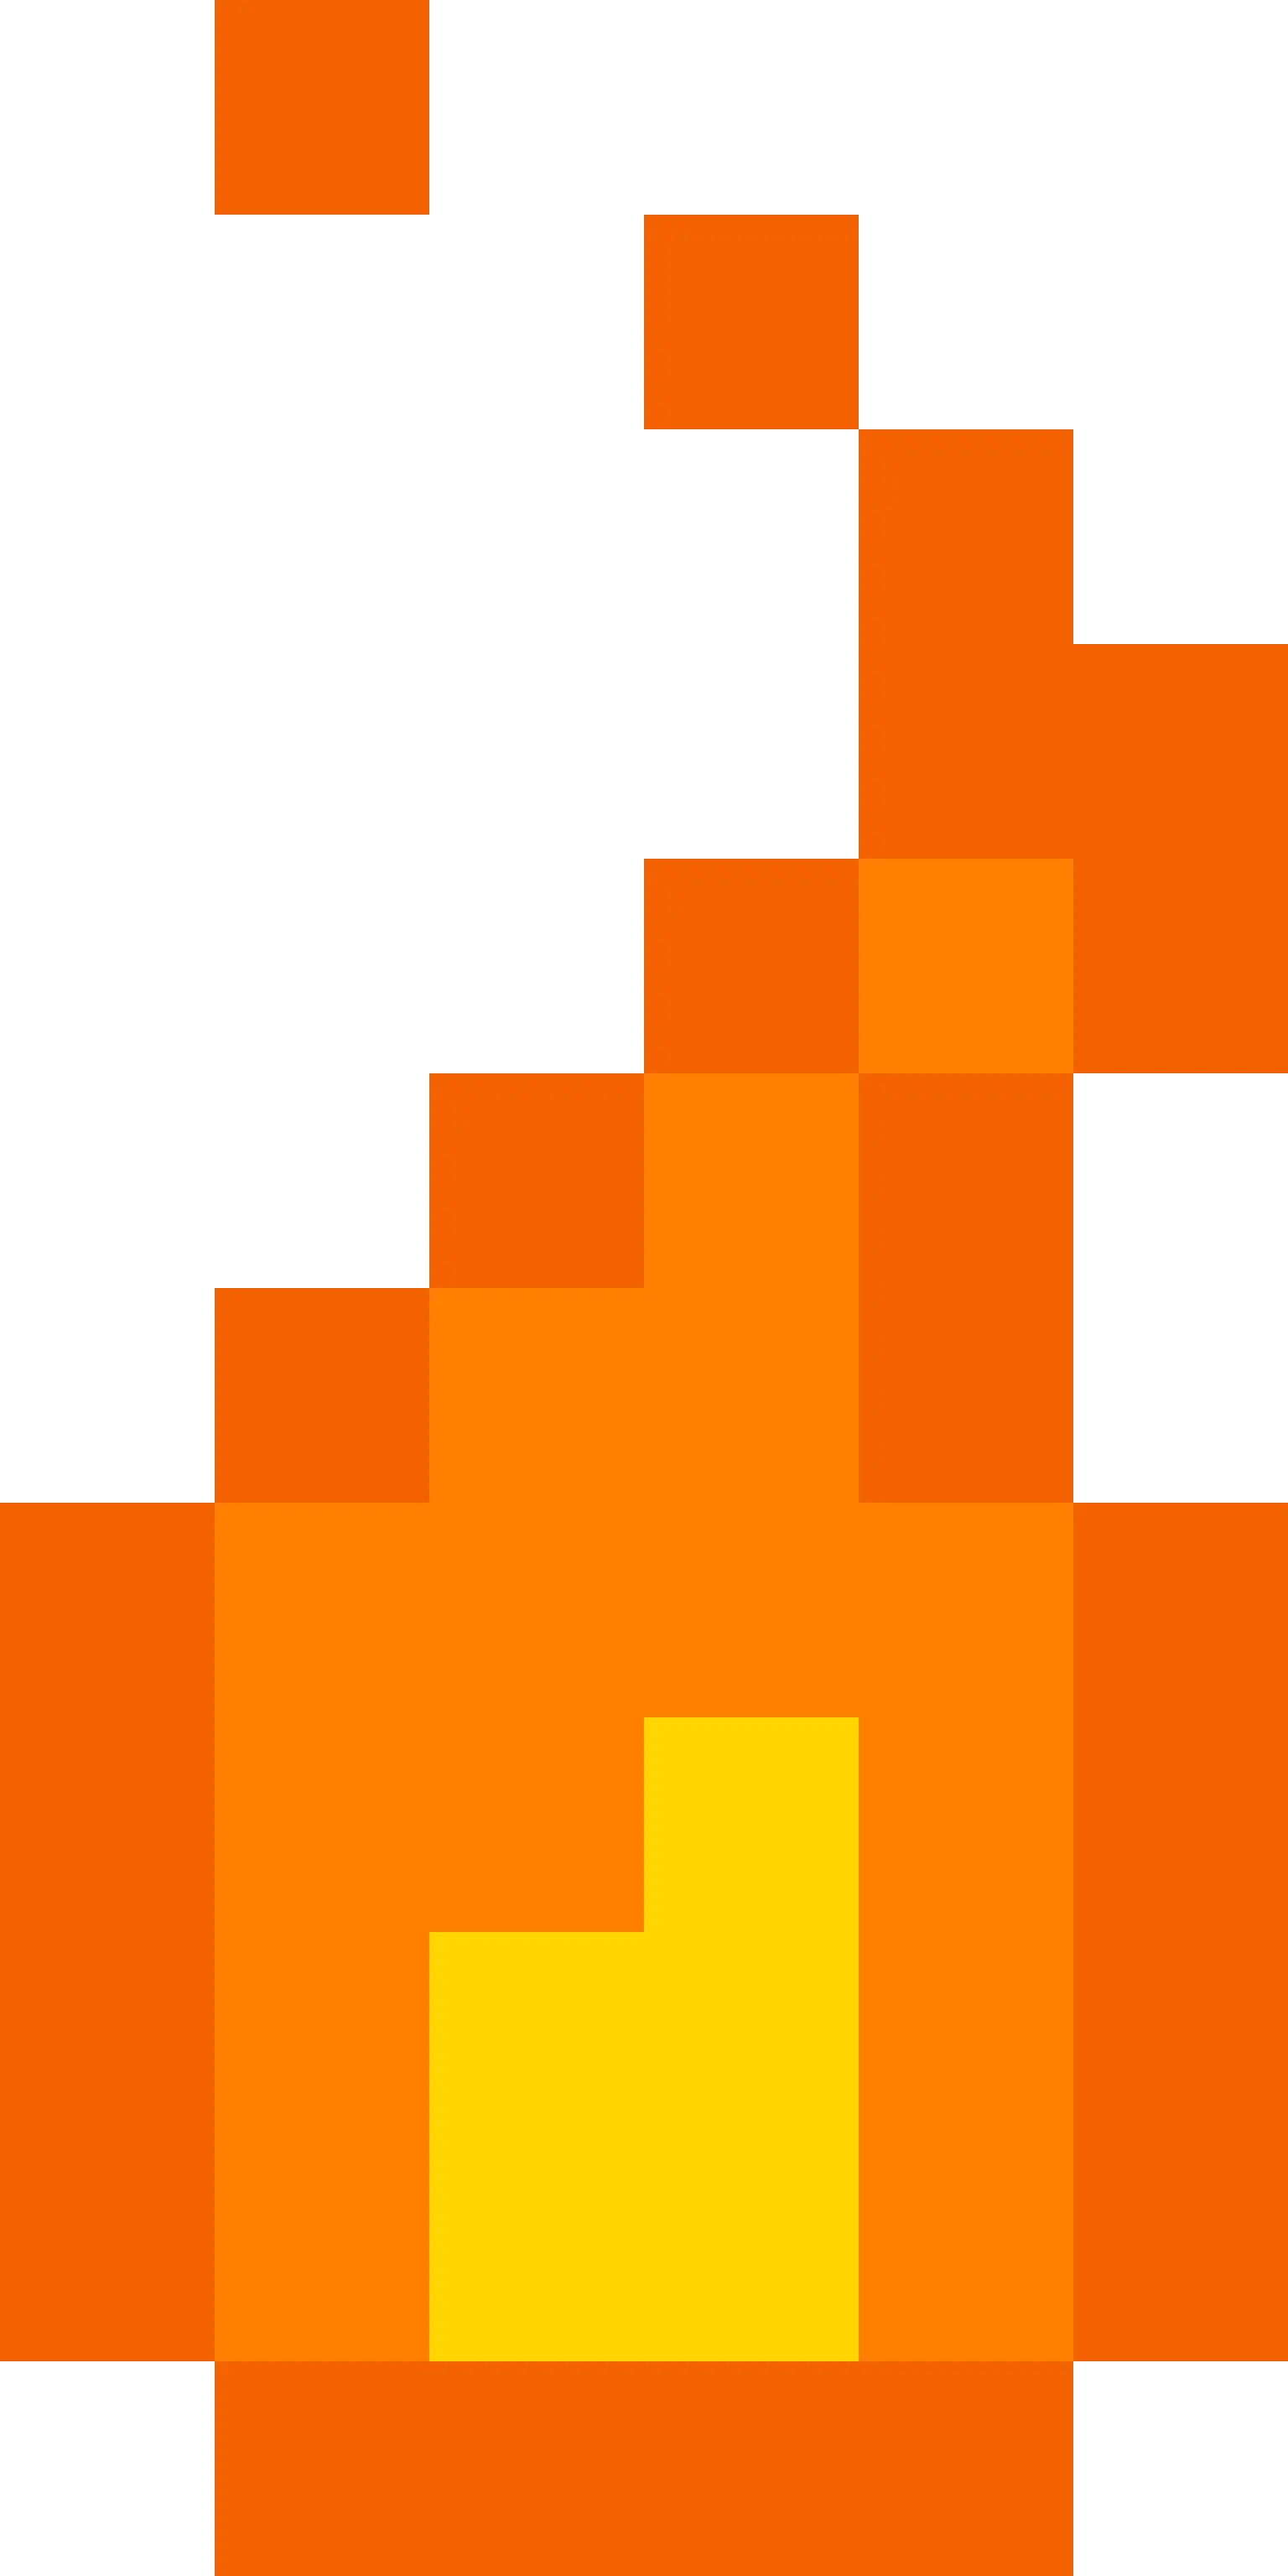 pixel art of a flame